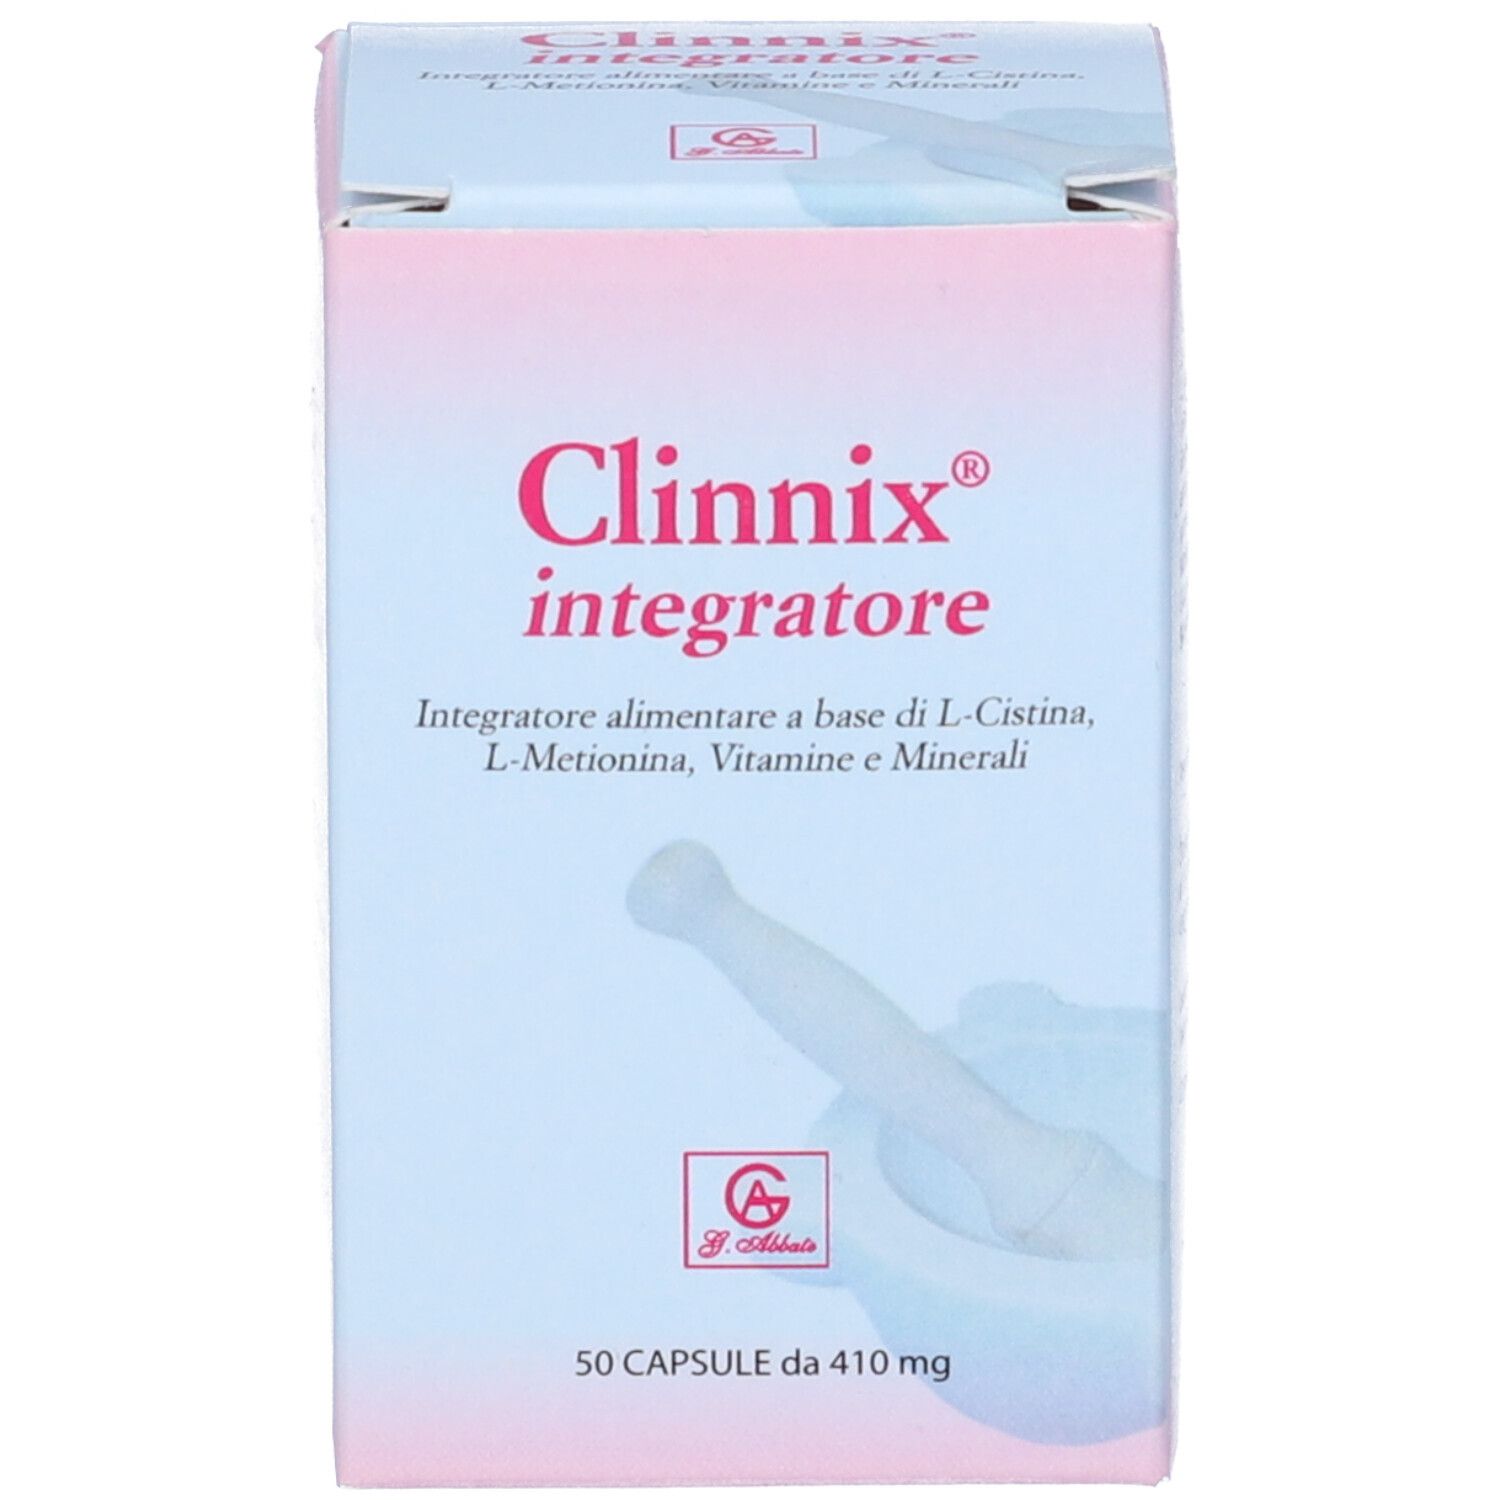 Clinnix Integratore Capsule